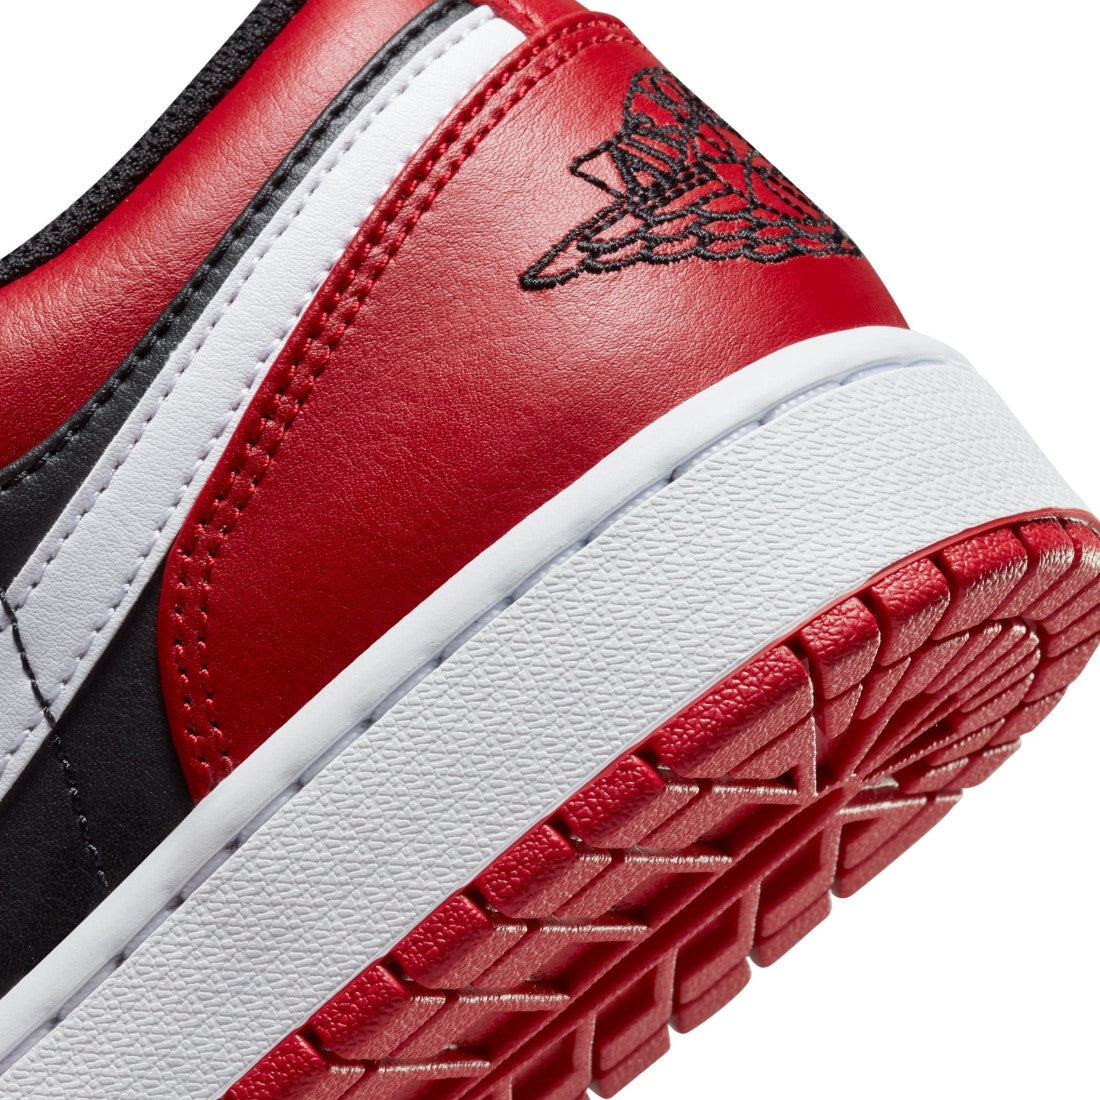 Air Jordan 1 Low Lifestyle SHoes